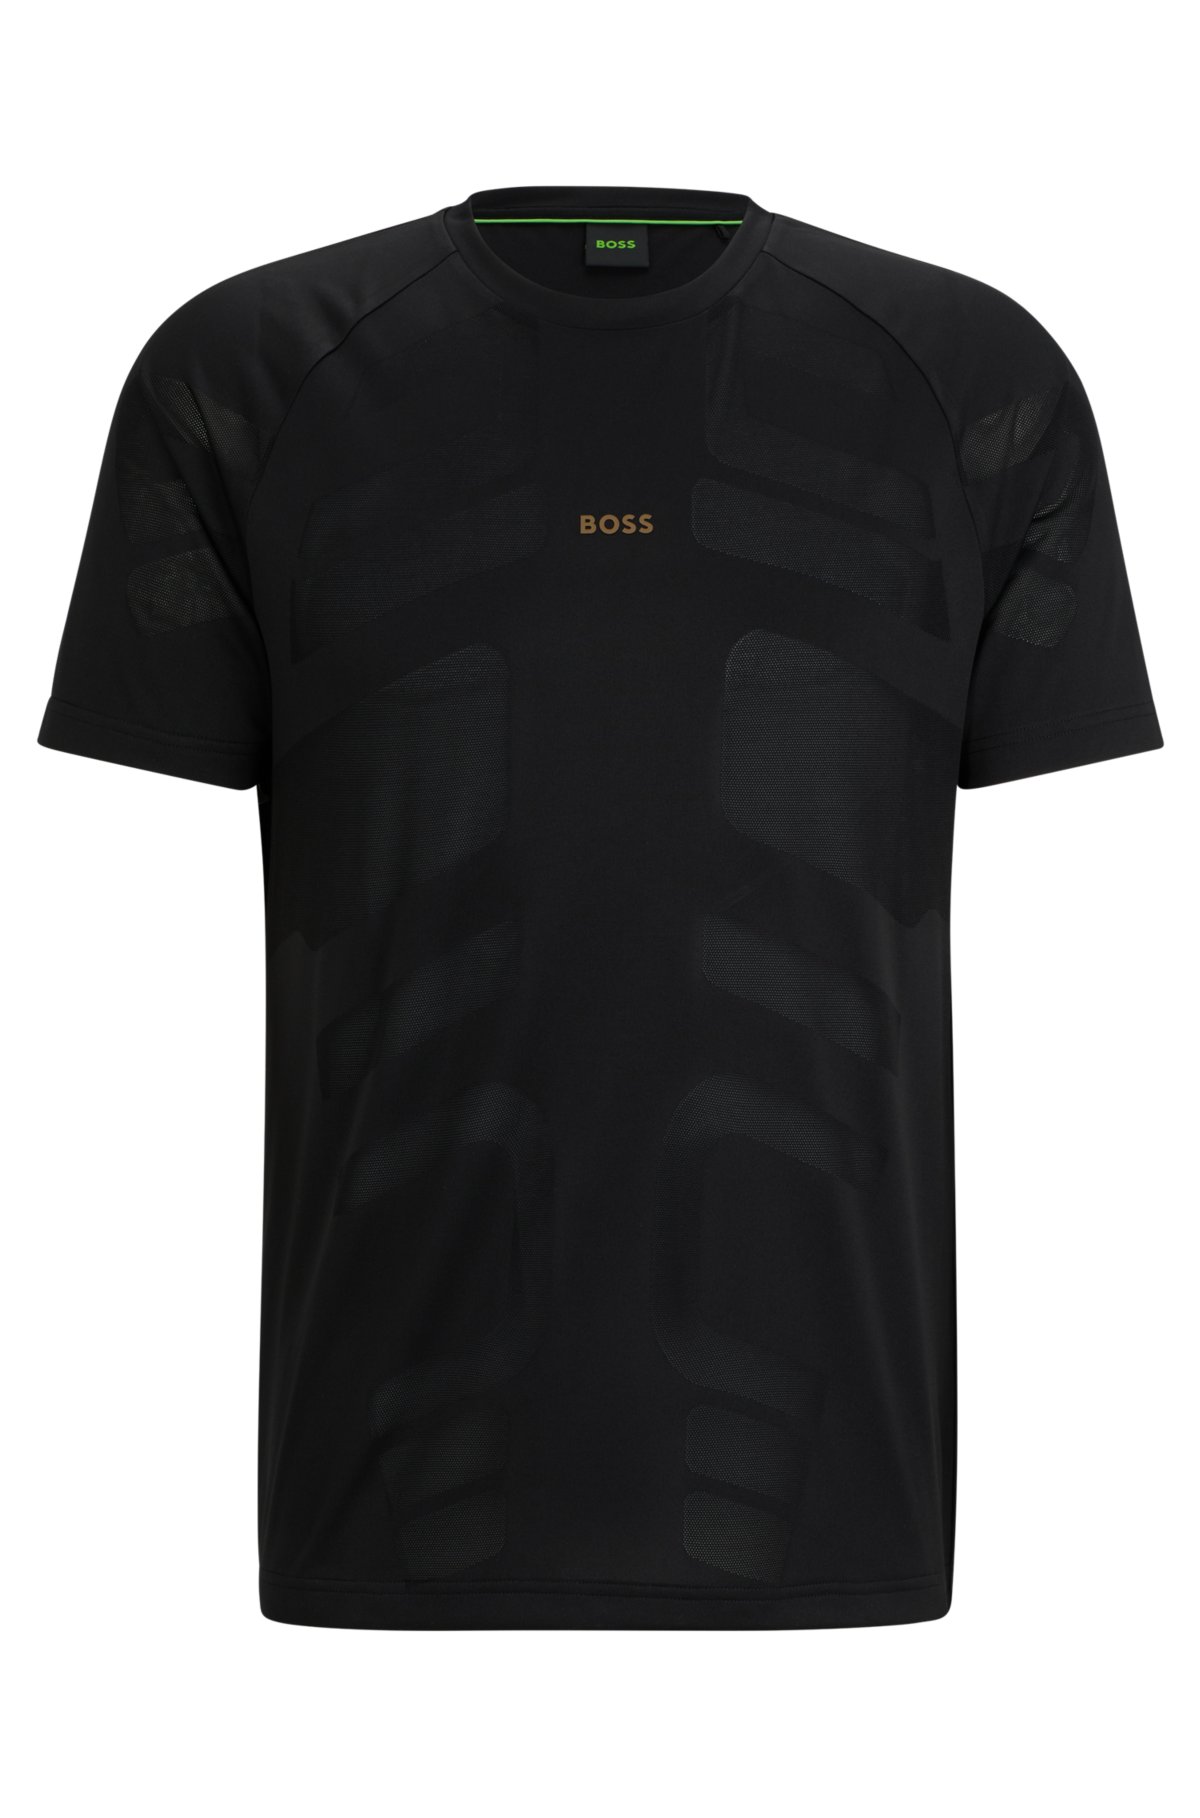 Performance-jacquard T-shirt with decorative reflective logo, Black